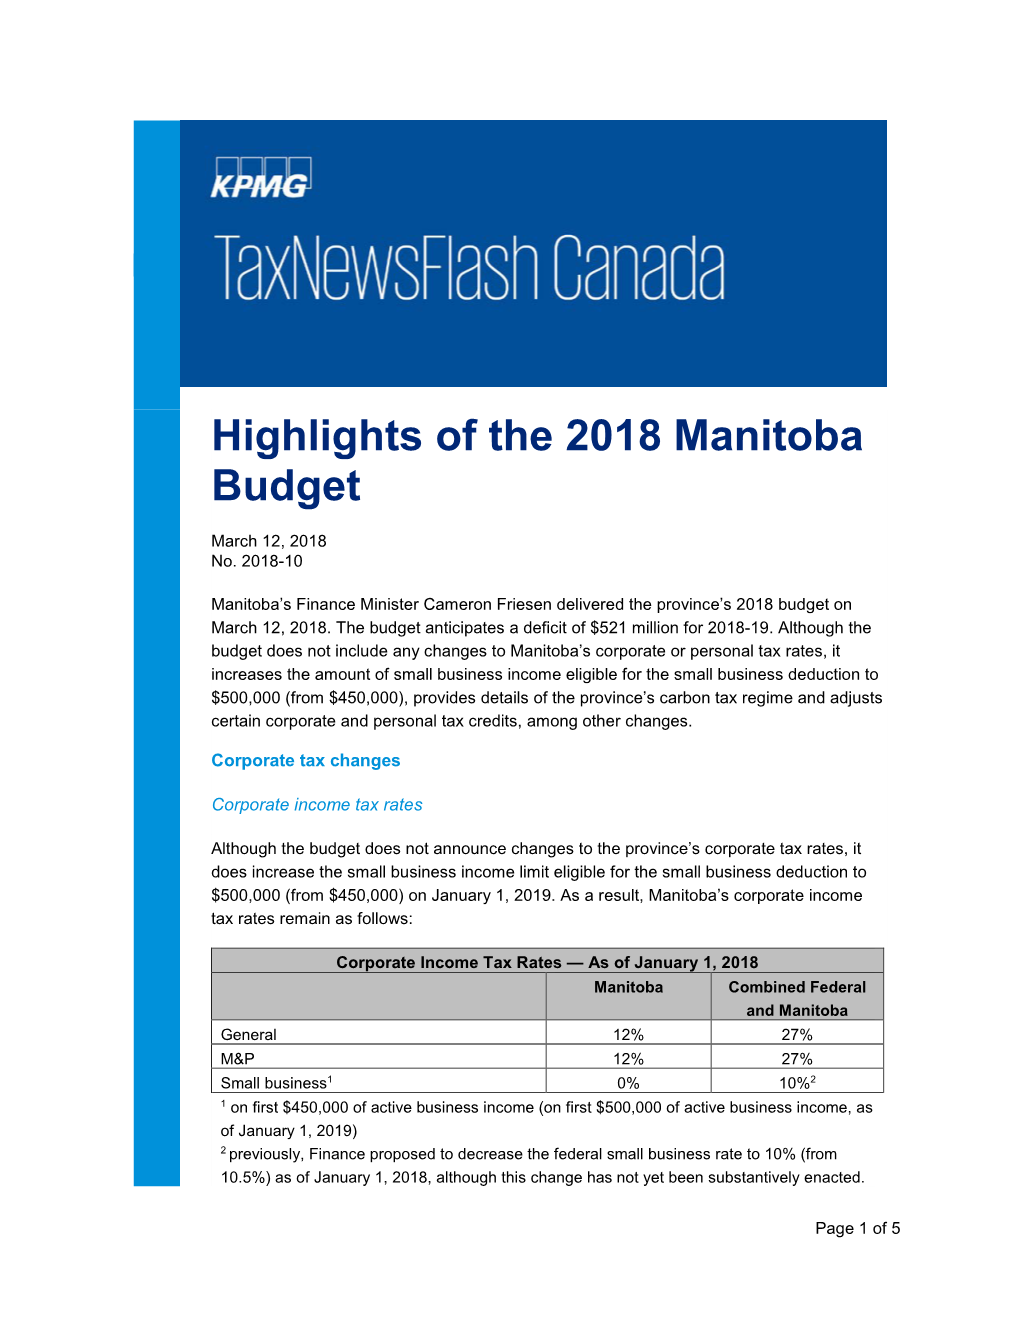 Highlights of the 2018 Manitoba Budget